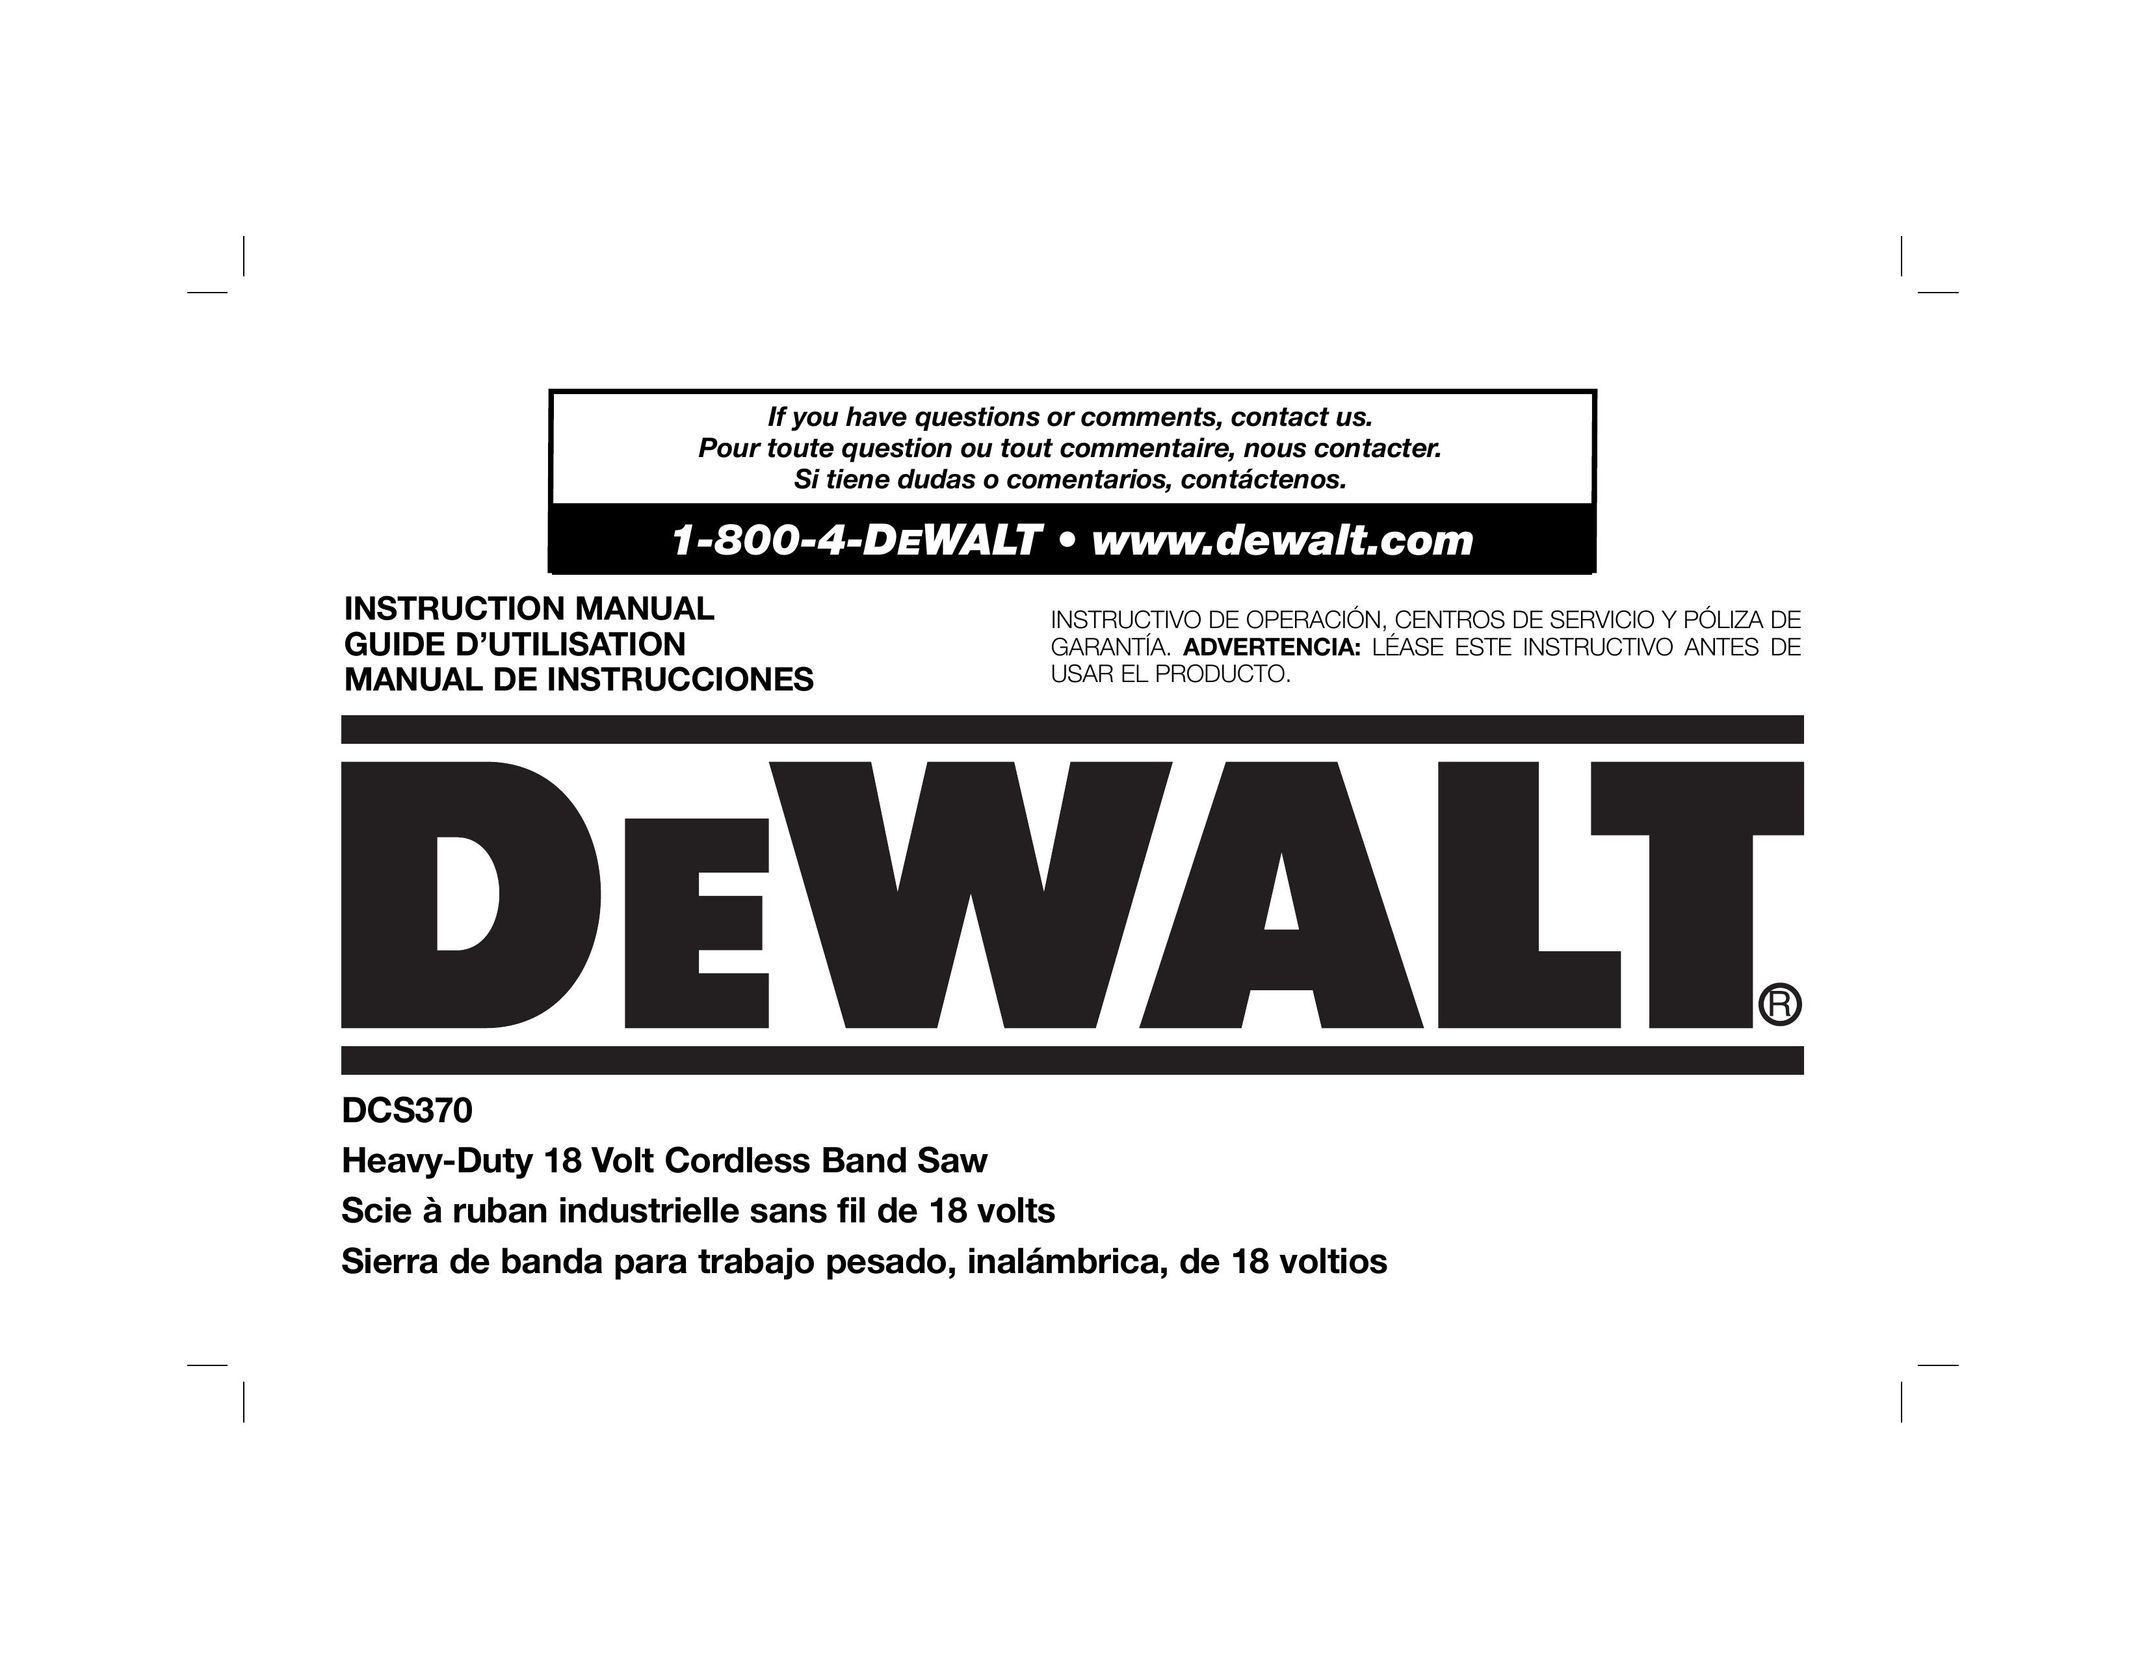 DeWalt DCS370 Cordless Saw User Manual